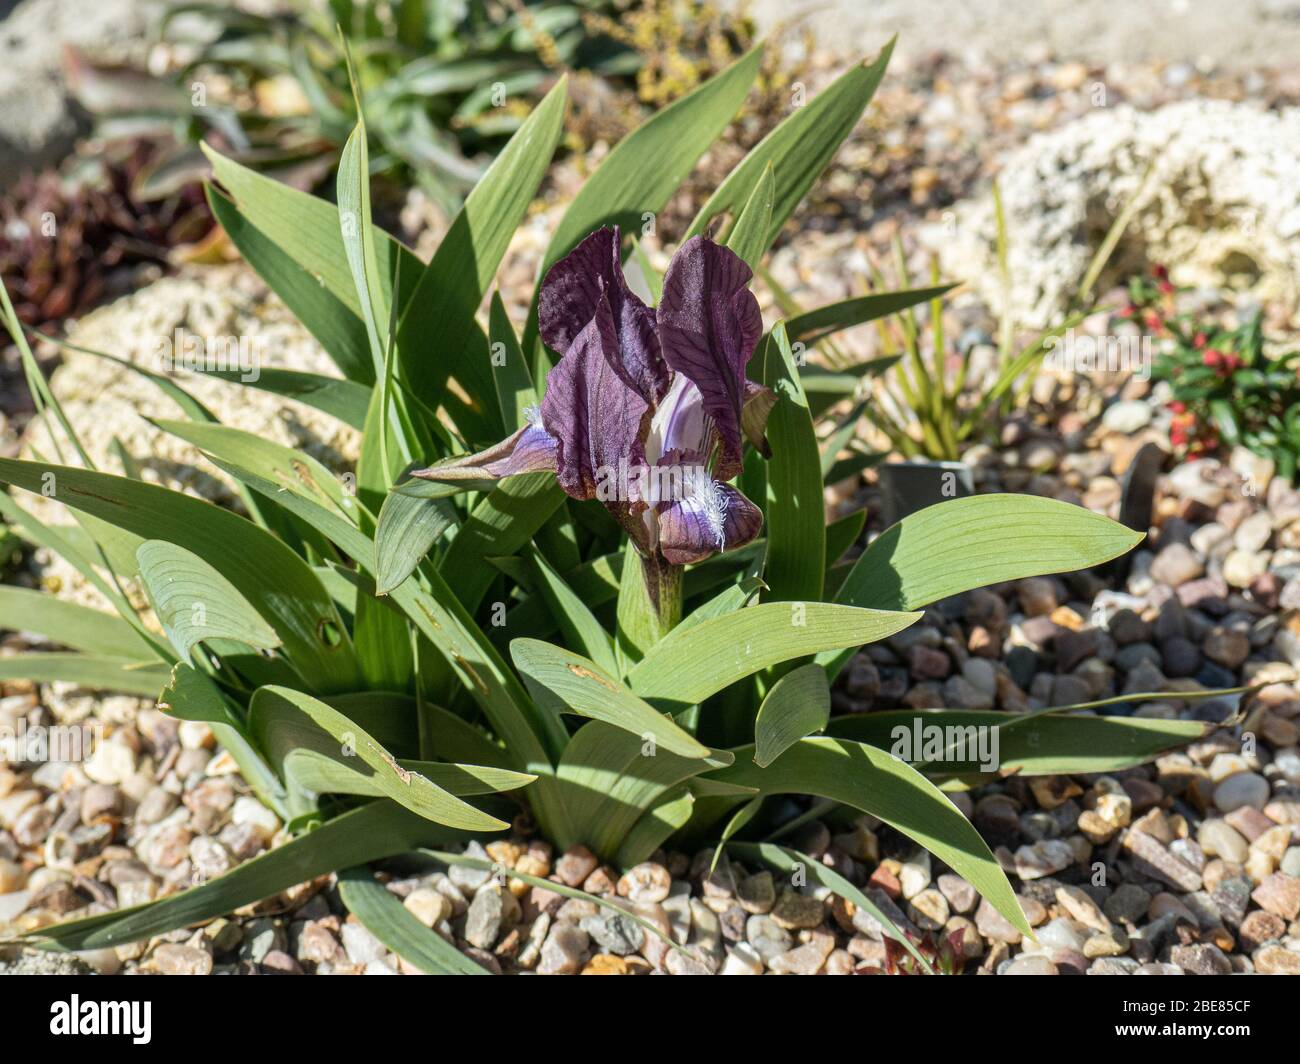 The deep purple miniature Iris, Iris suaveolens flowering in a sink garden Stock Photo